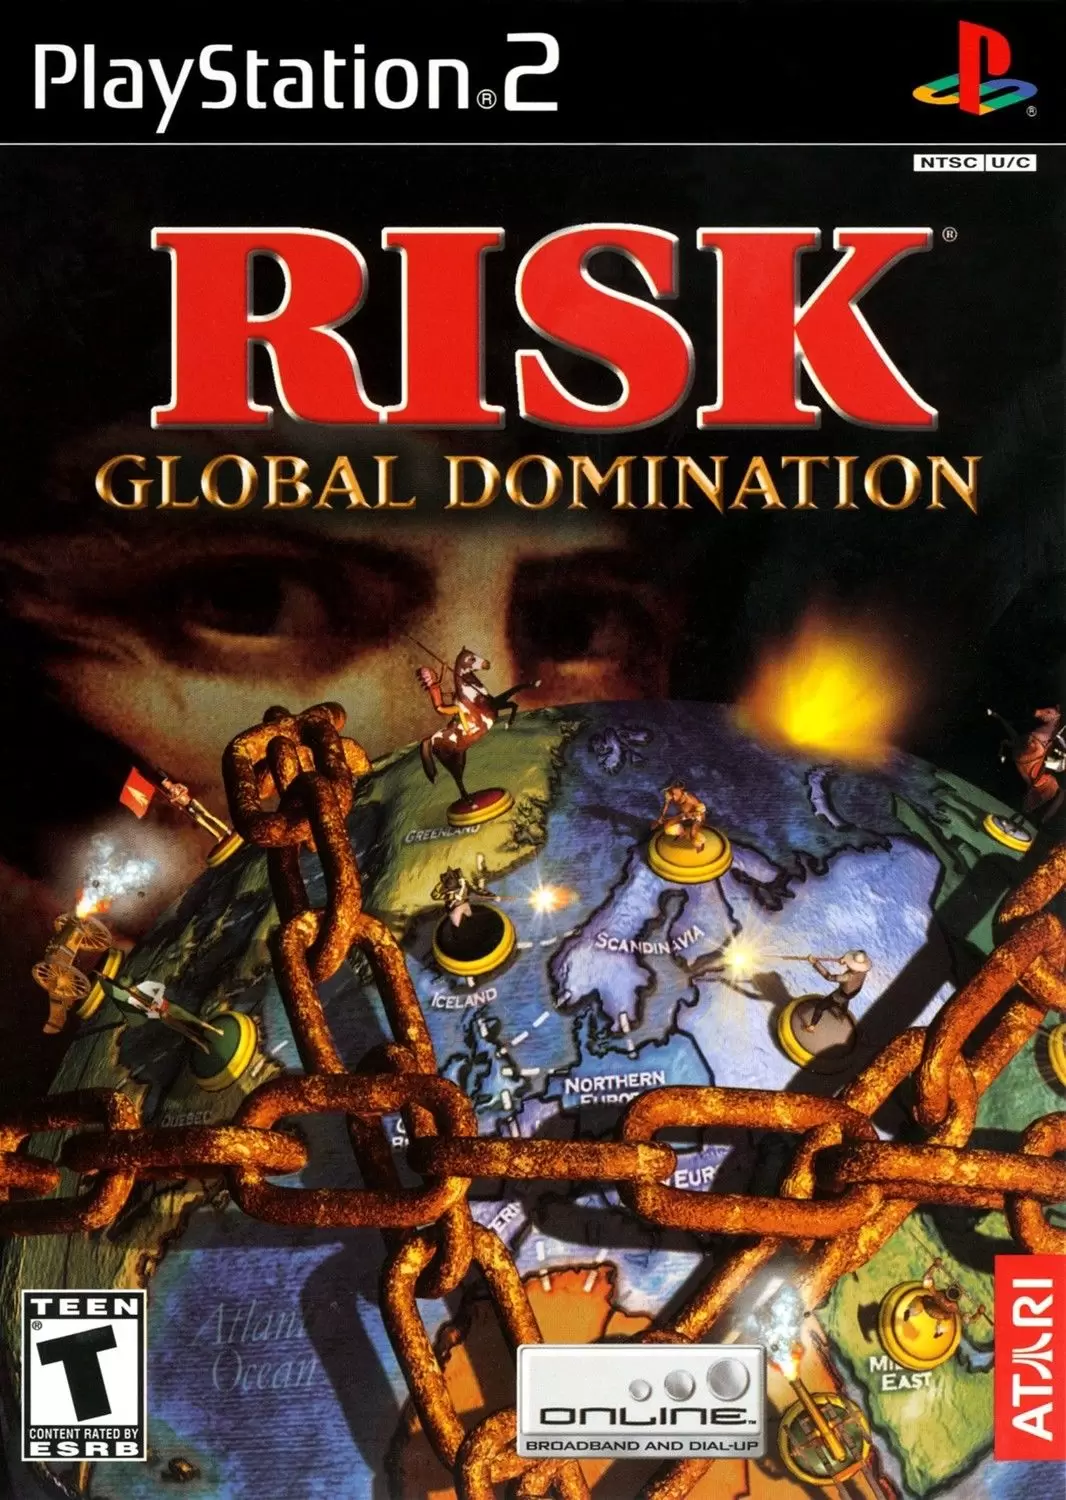 PS2 Games - RISK: Global Domination